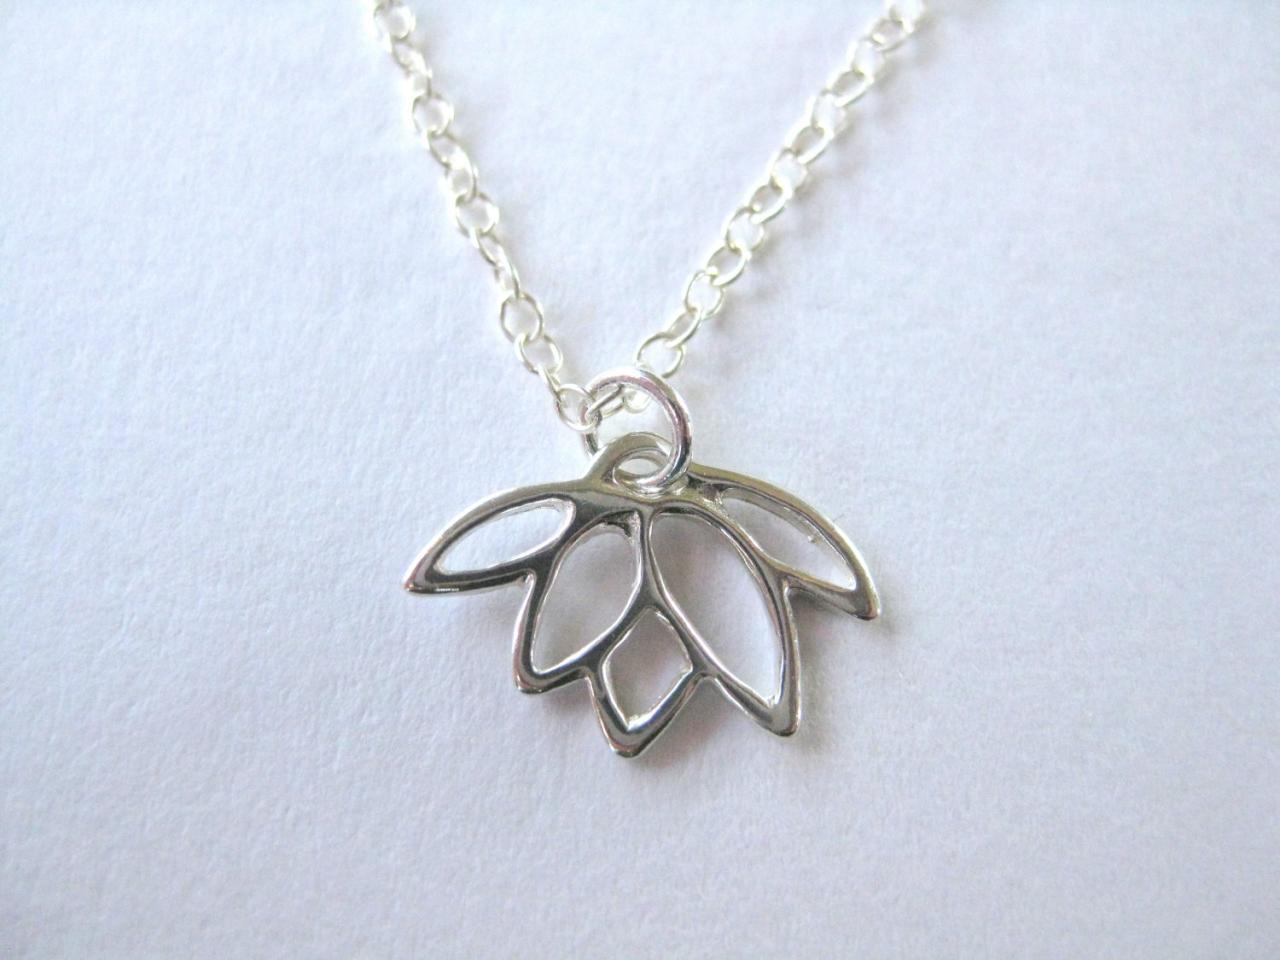 Silver Lotus Charm Necklace, Simple Lotus Pendant Necklace